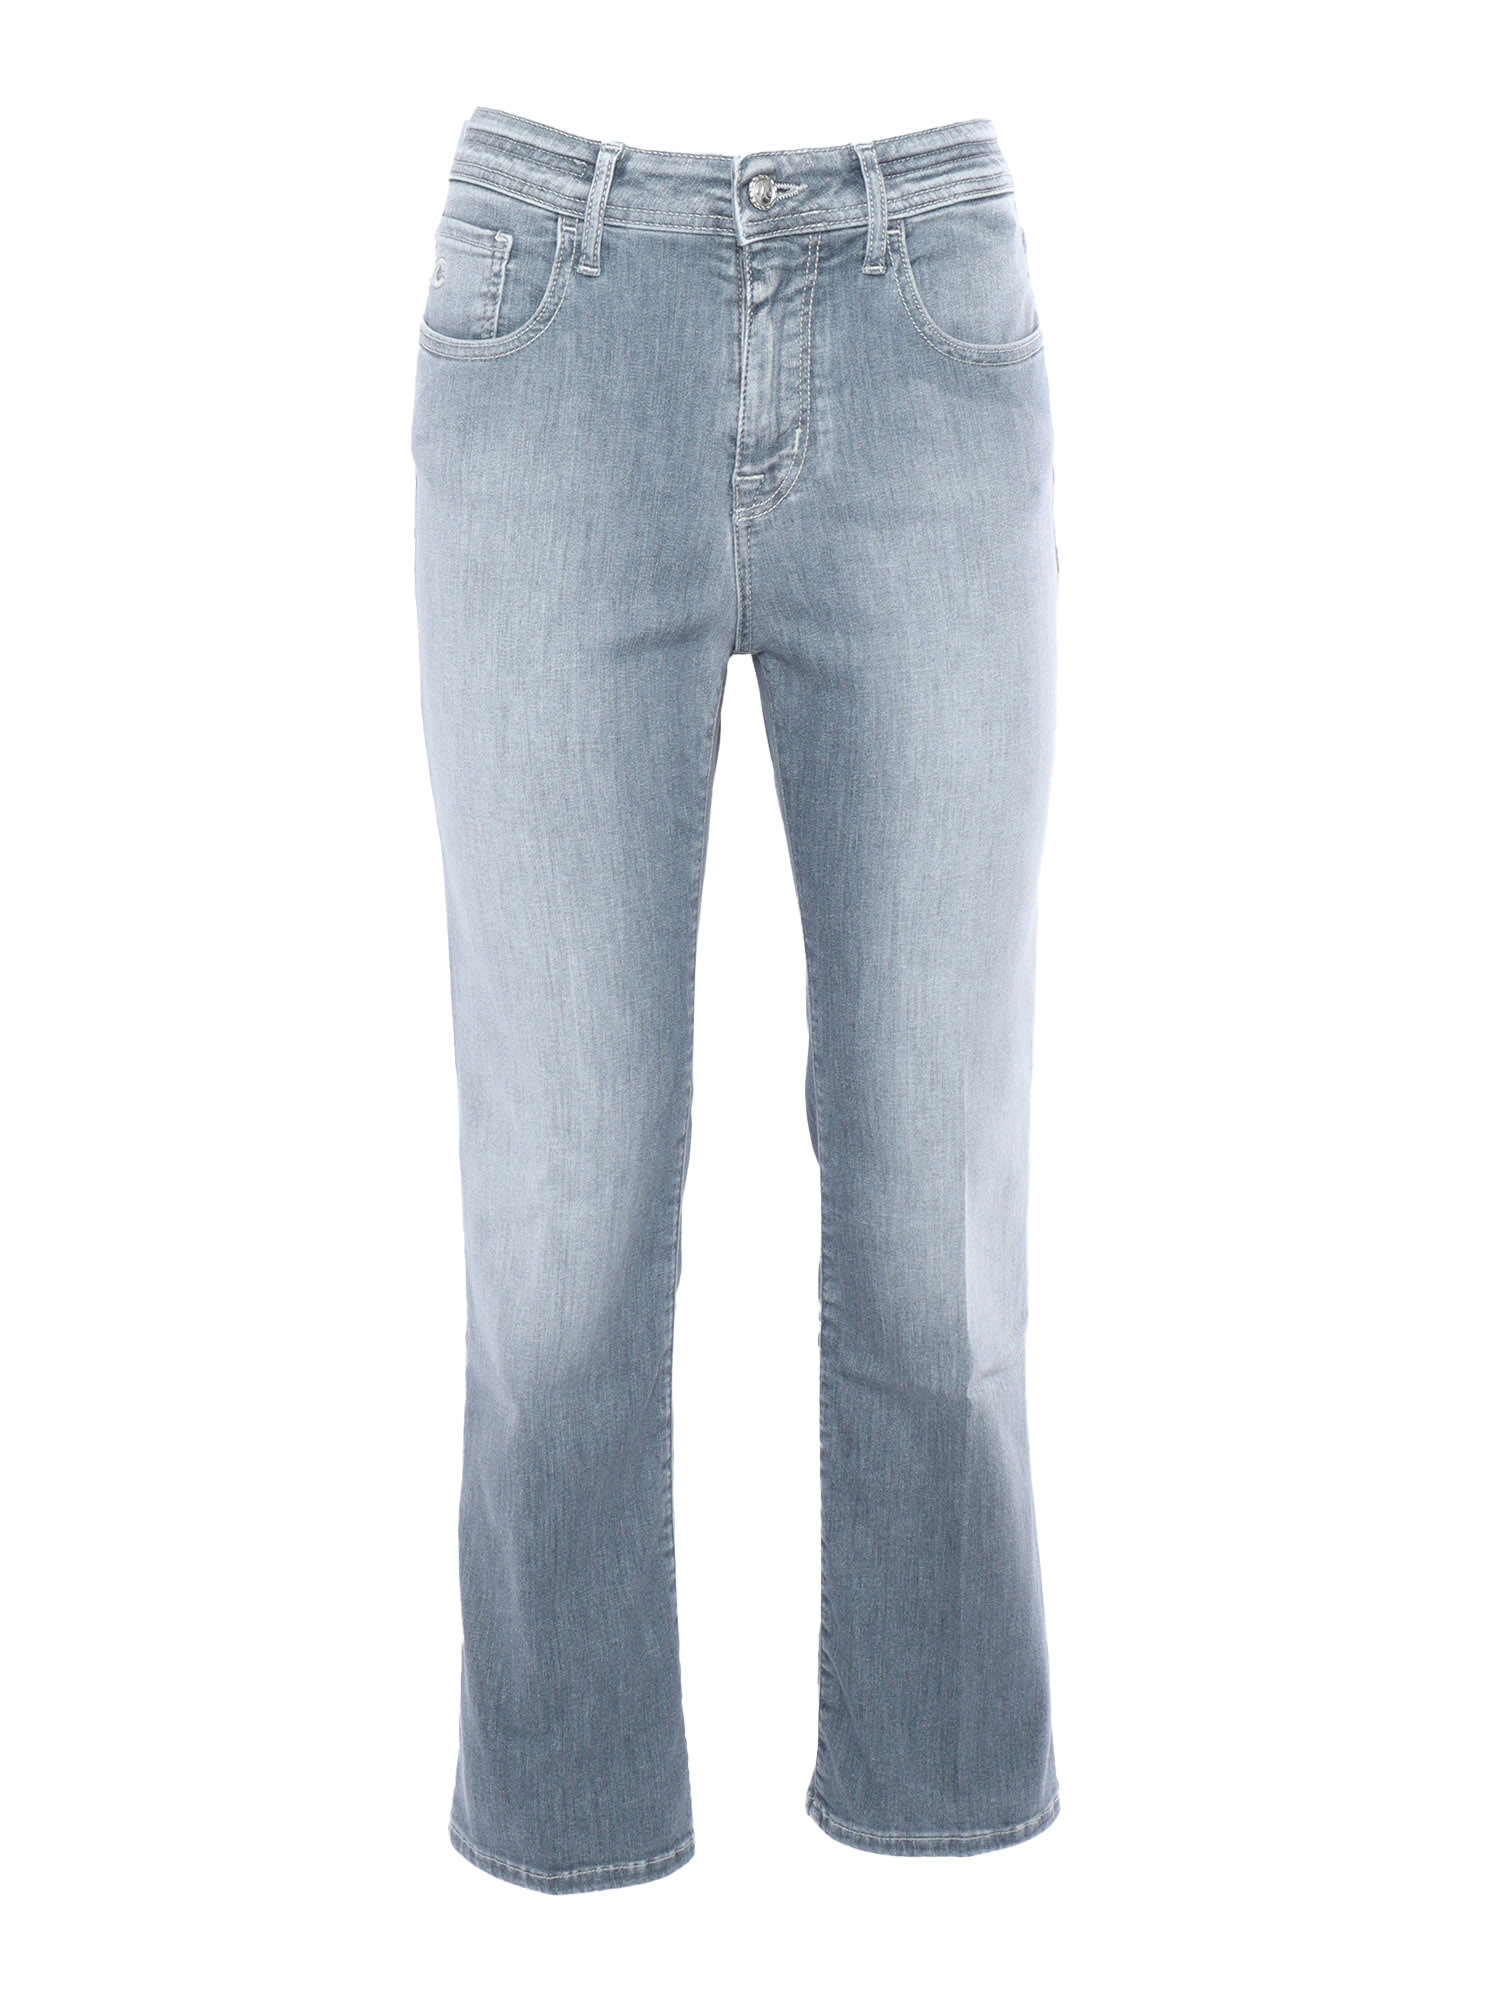 Gray 5 Pocket Jeans